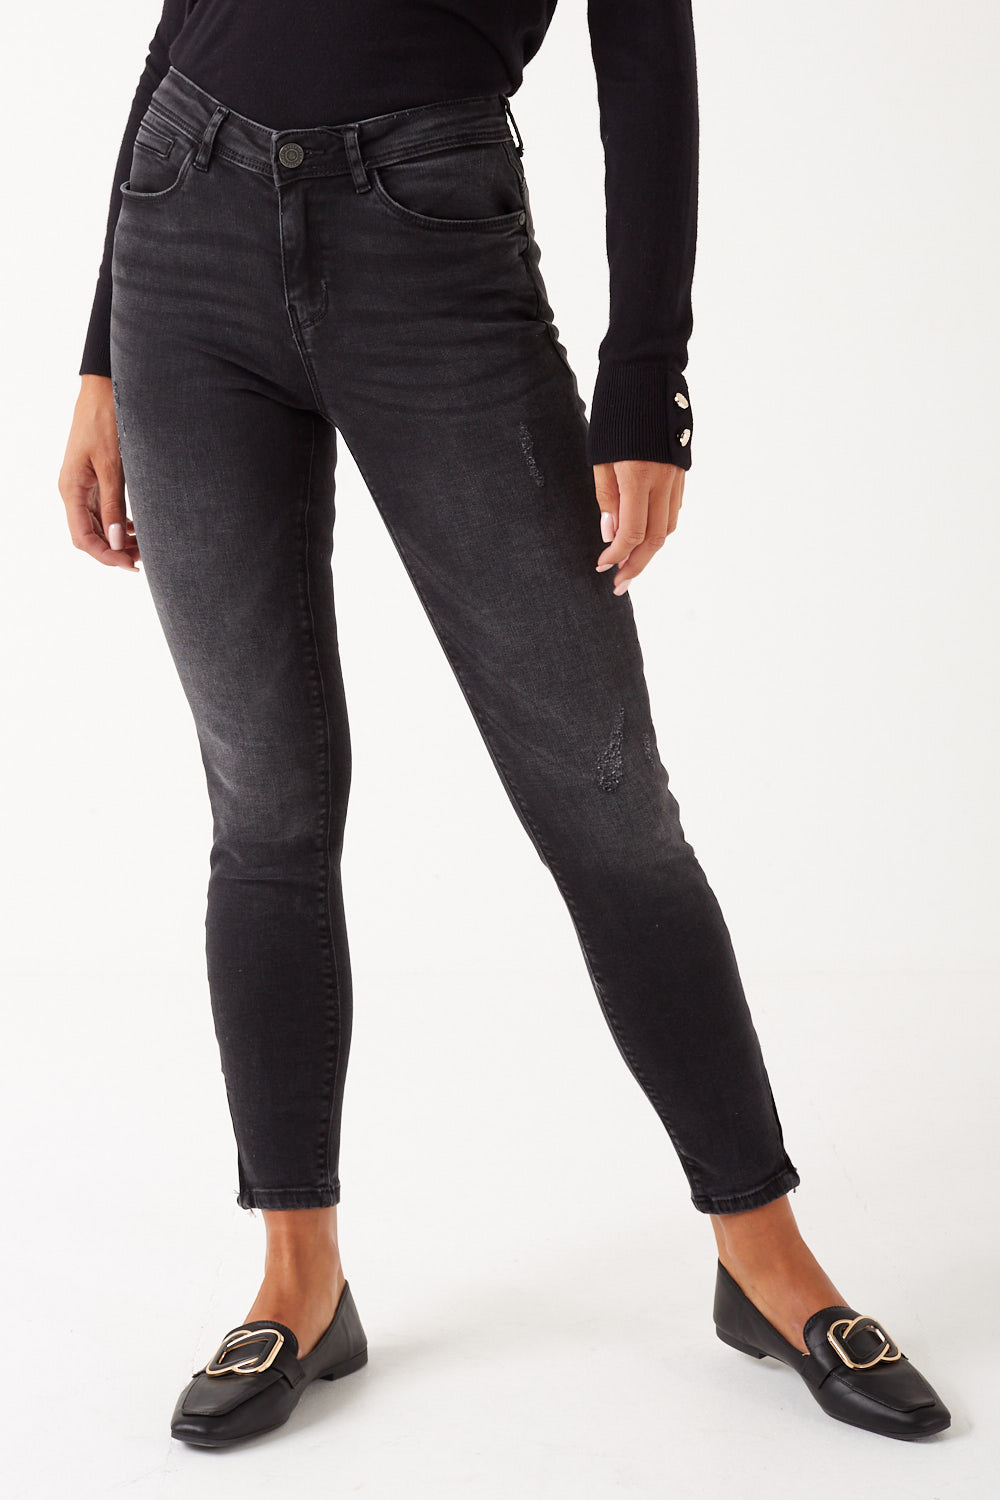 Noisy May Kimmy Ankle Zip Jeans in Dark Grey